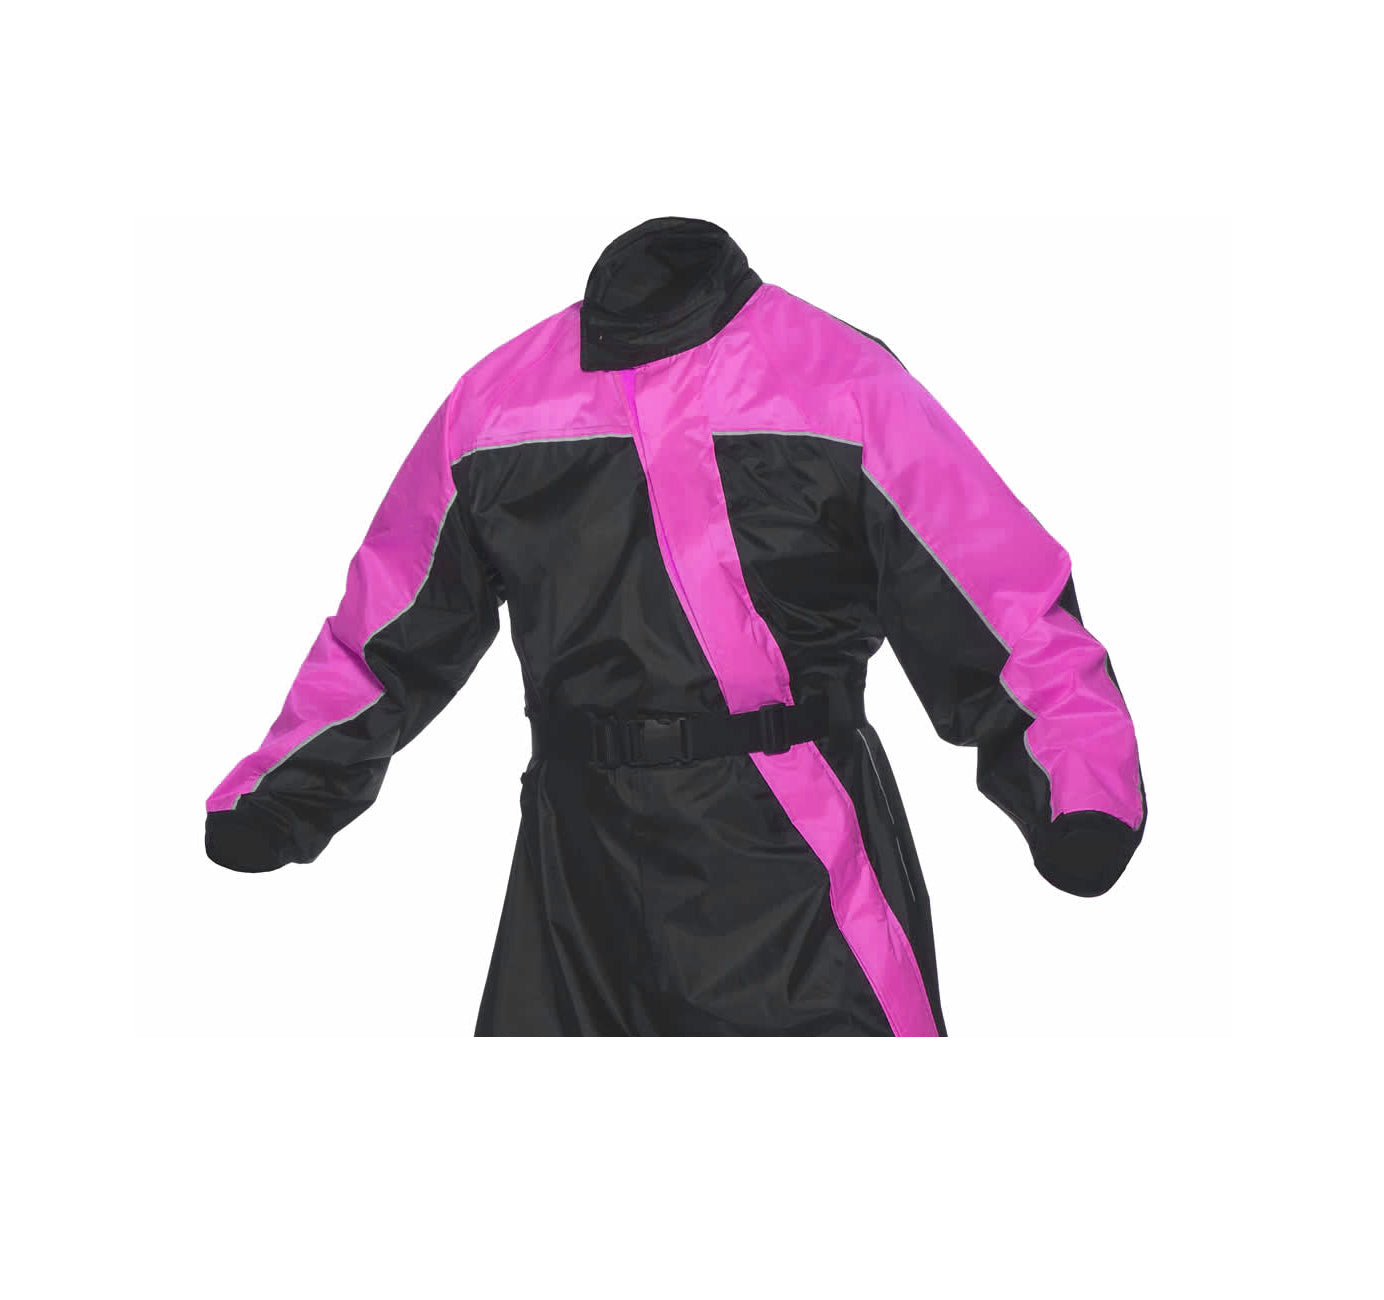 Adult rain suits | Shop waterproof Racing RainSuit for men and women in pink color | Skyexsuits